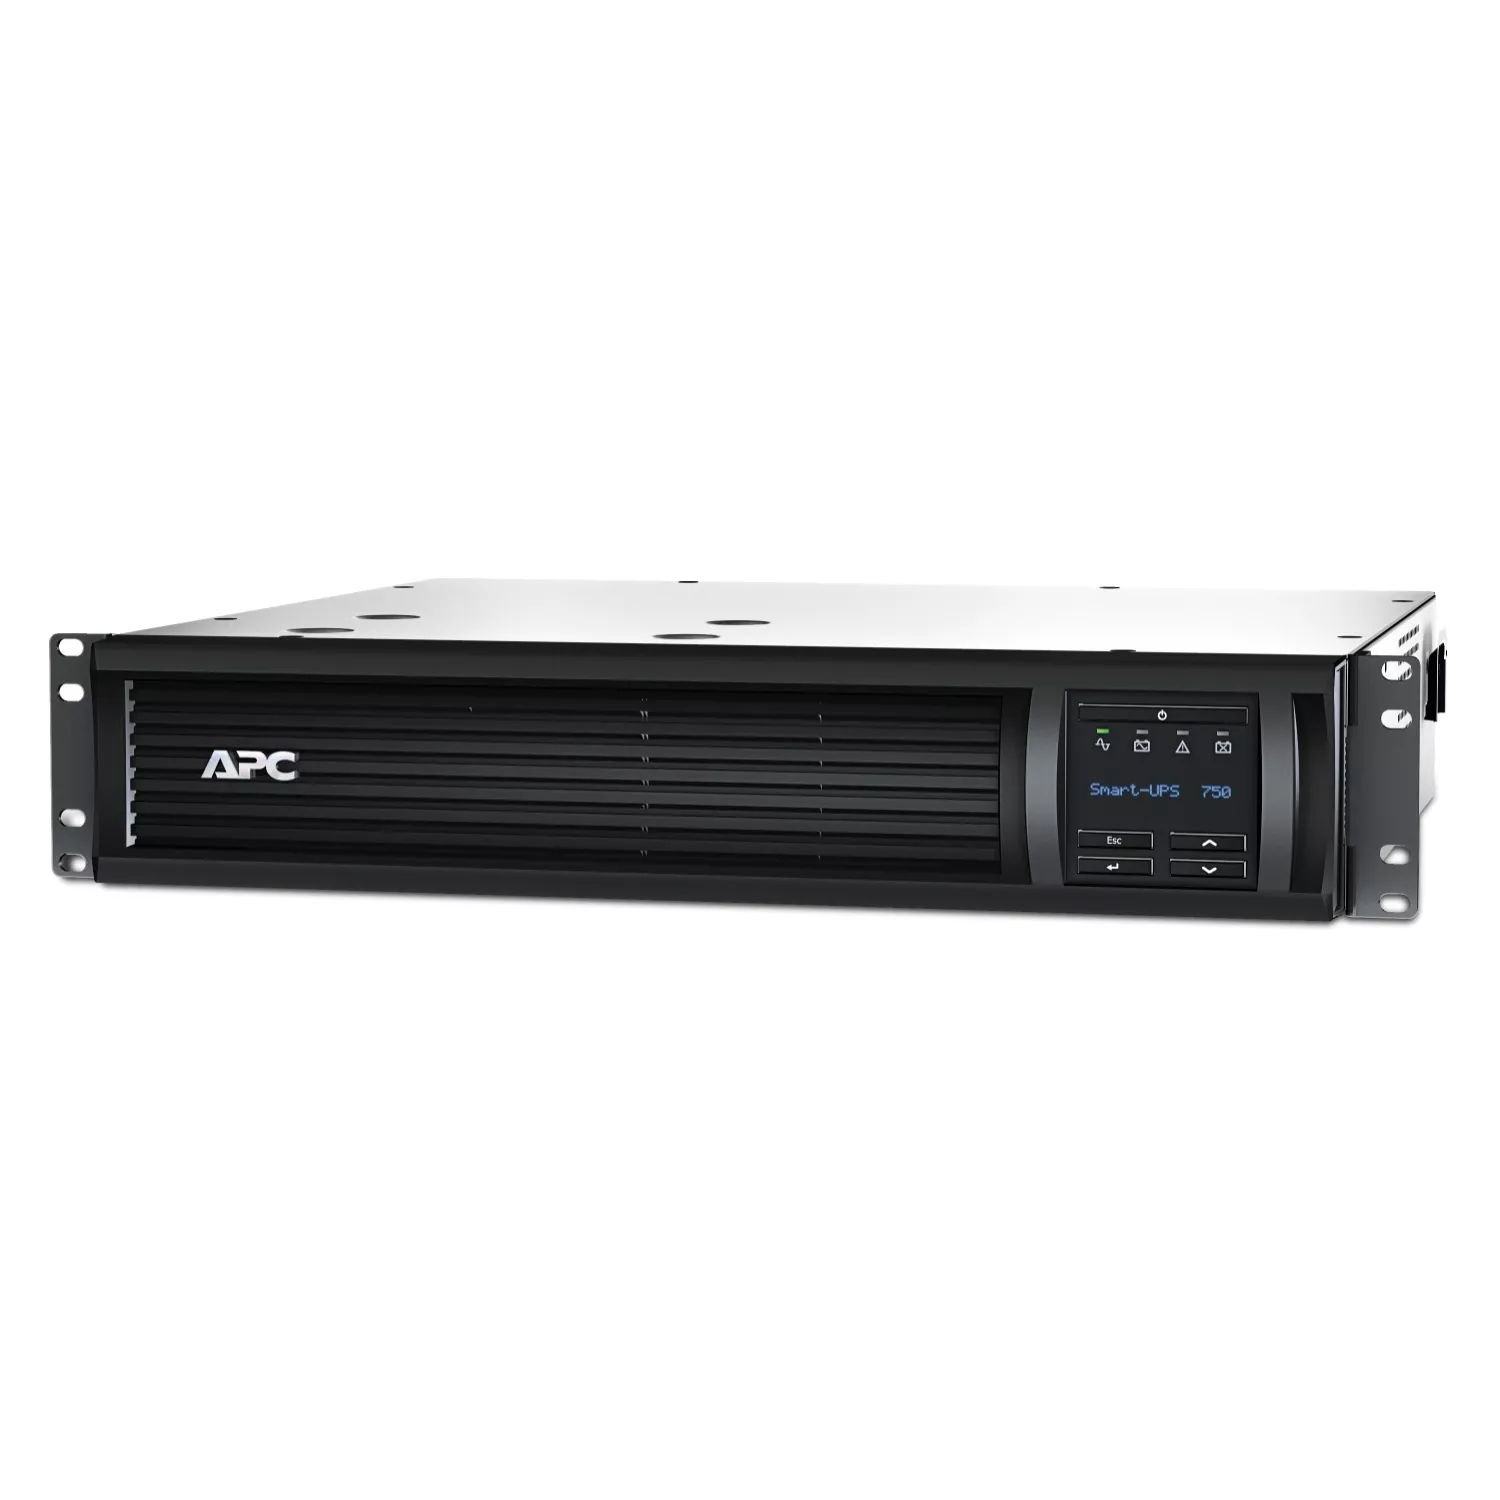 Achat APC Smart UPS 750VA LCD RM 2U 230V avec carte réseau et autres produits de la marque APC